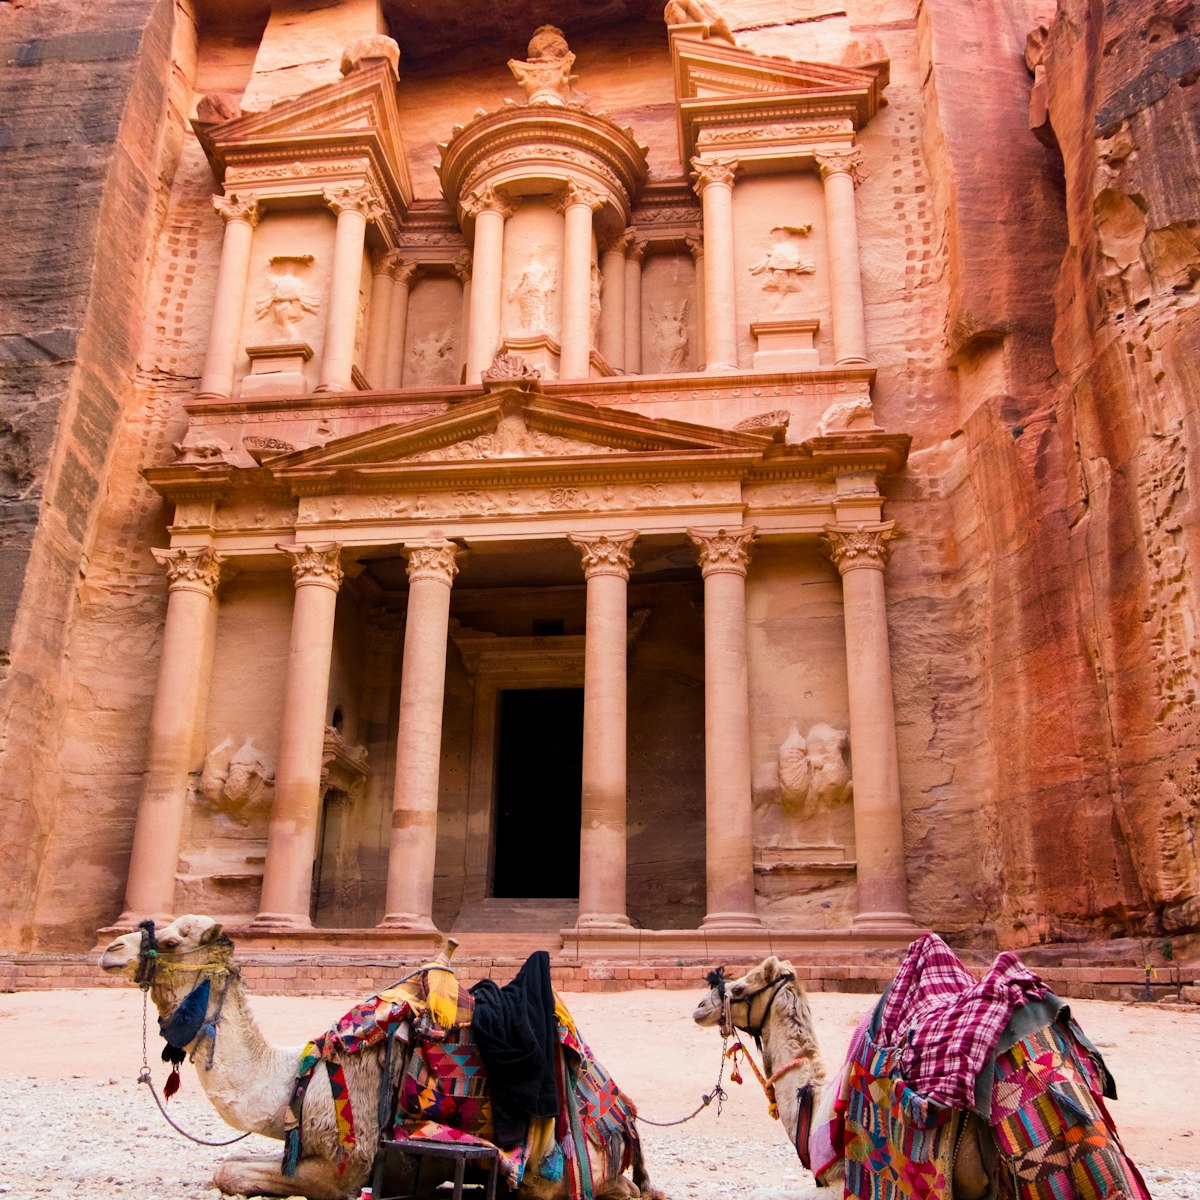 Jordan has so many amazing sights like Petra, wadi rum, jerash and the dead sea
1368437783